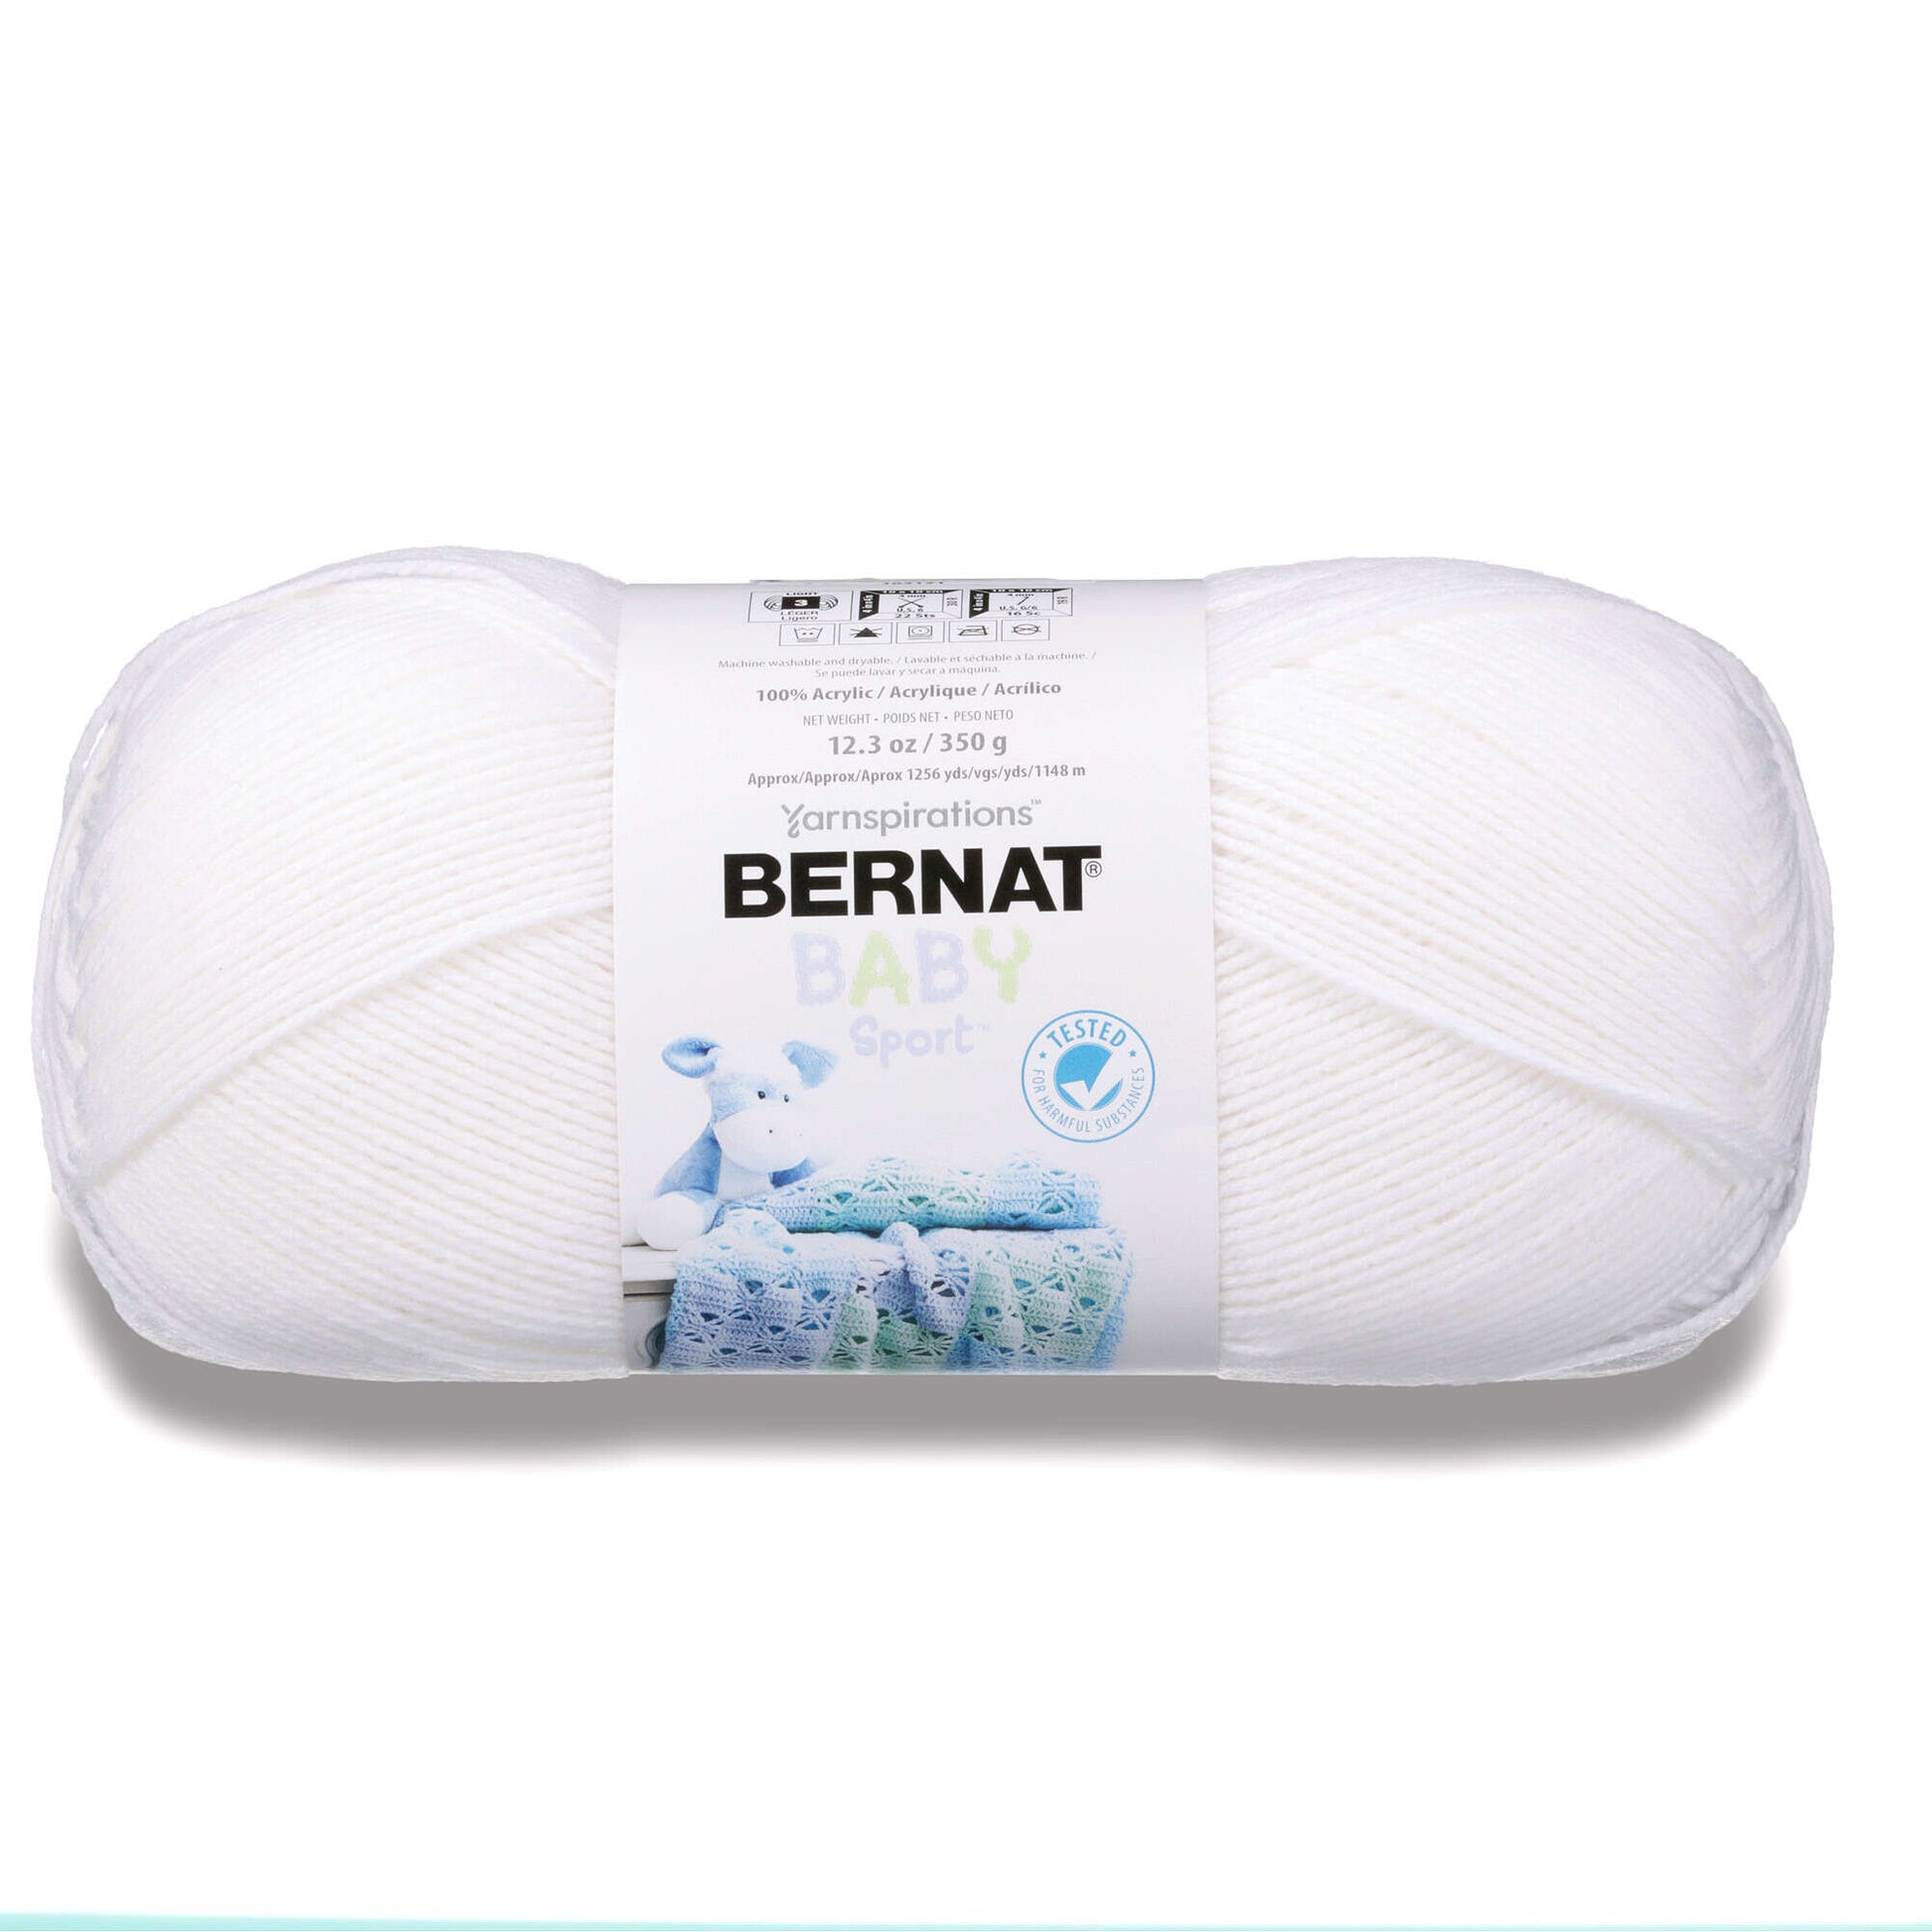 Bernat Baby Sport Yarn 350g/300g -  Norway